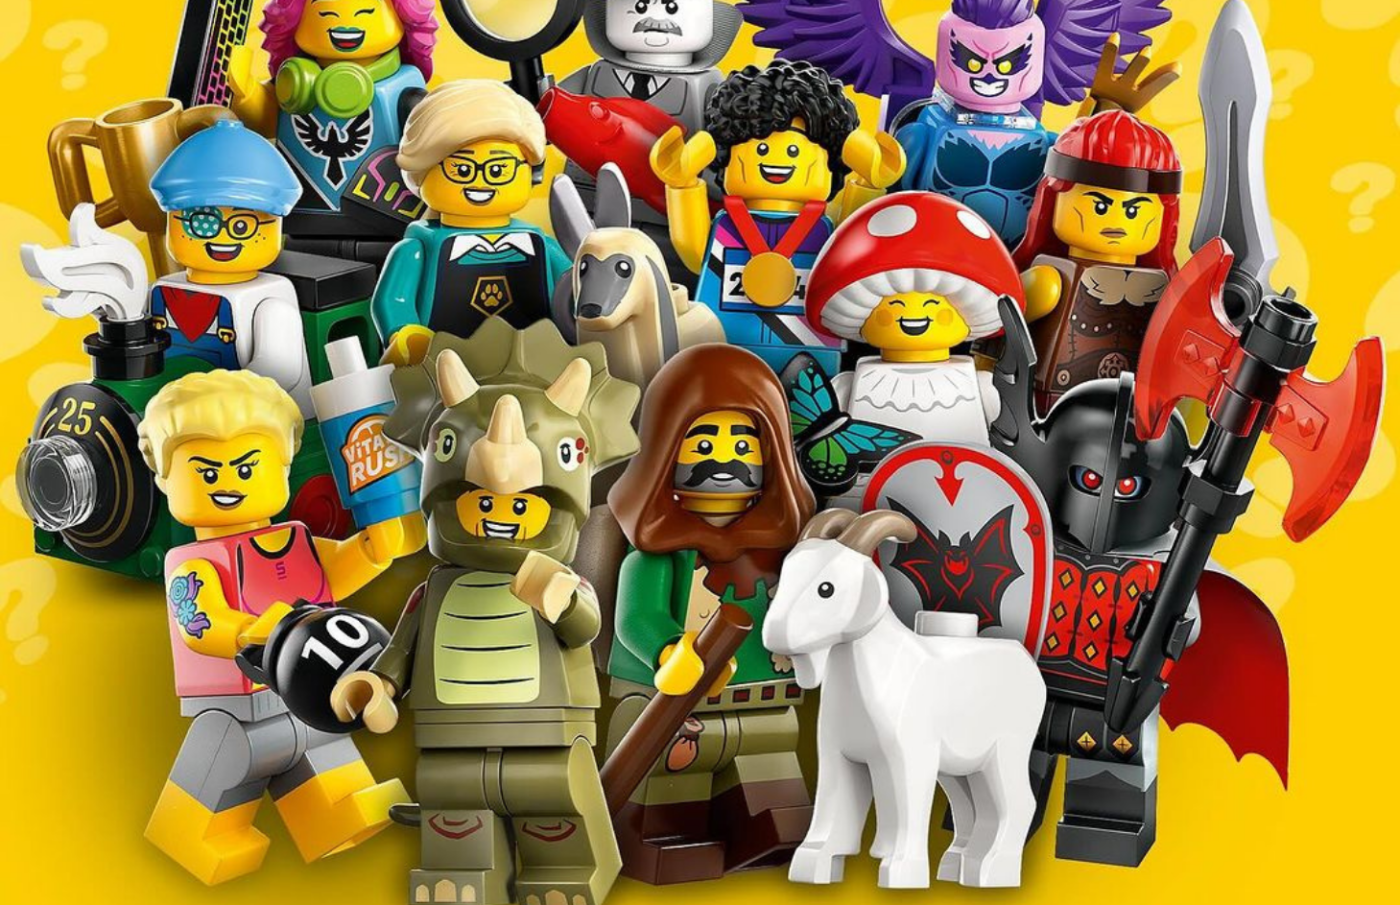 Review: LEGO Marvel Minifigures Series 2 - Jay's Brick Blog